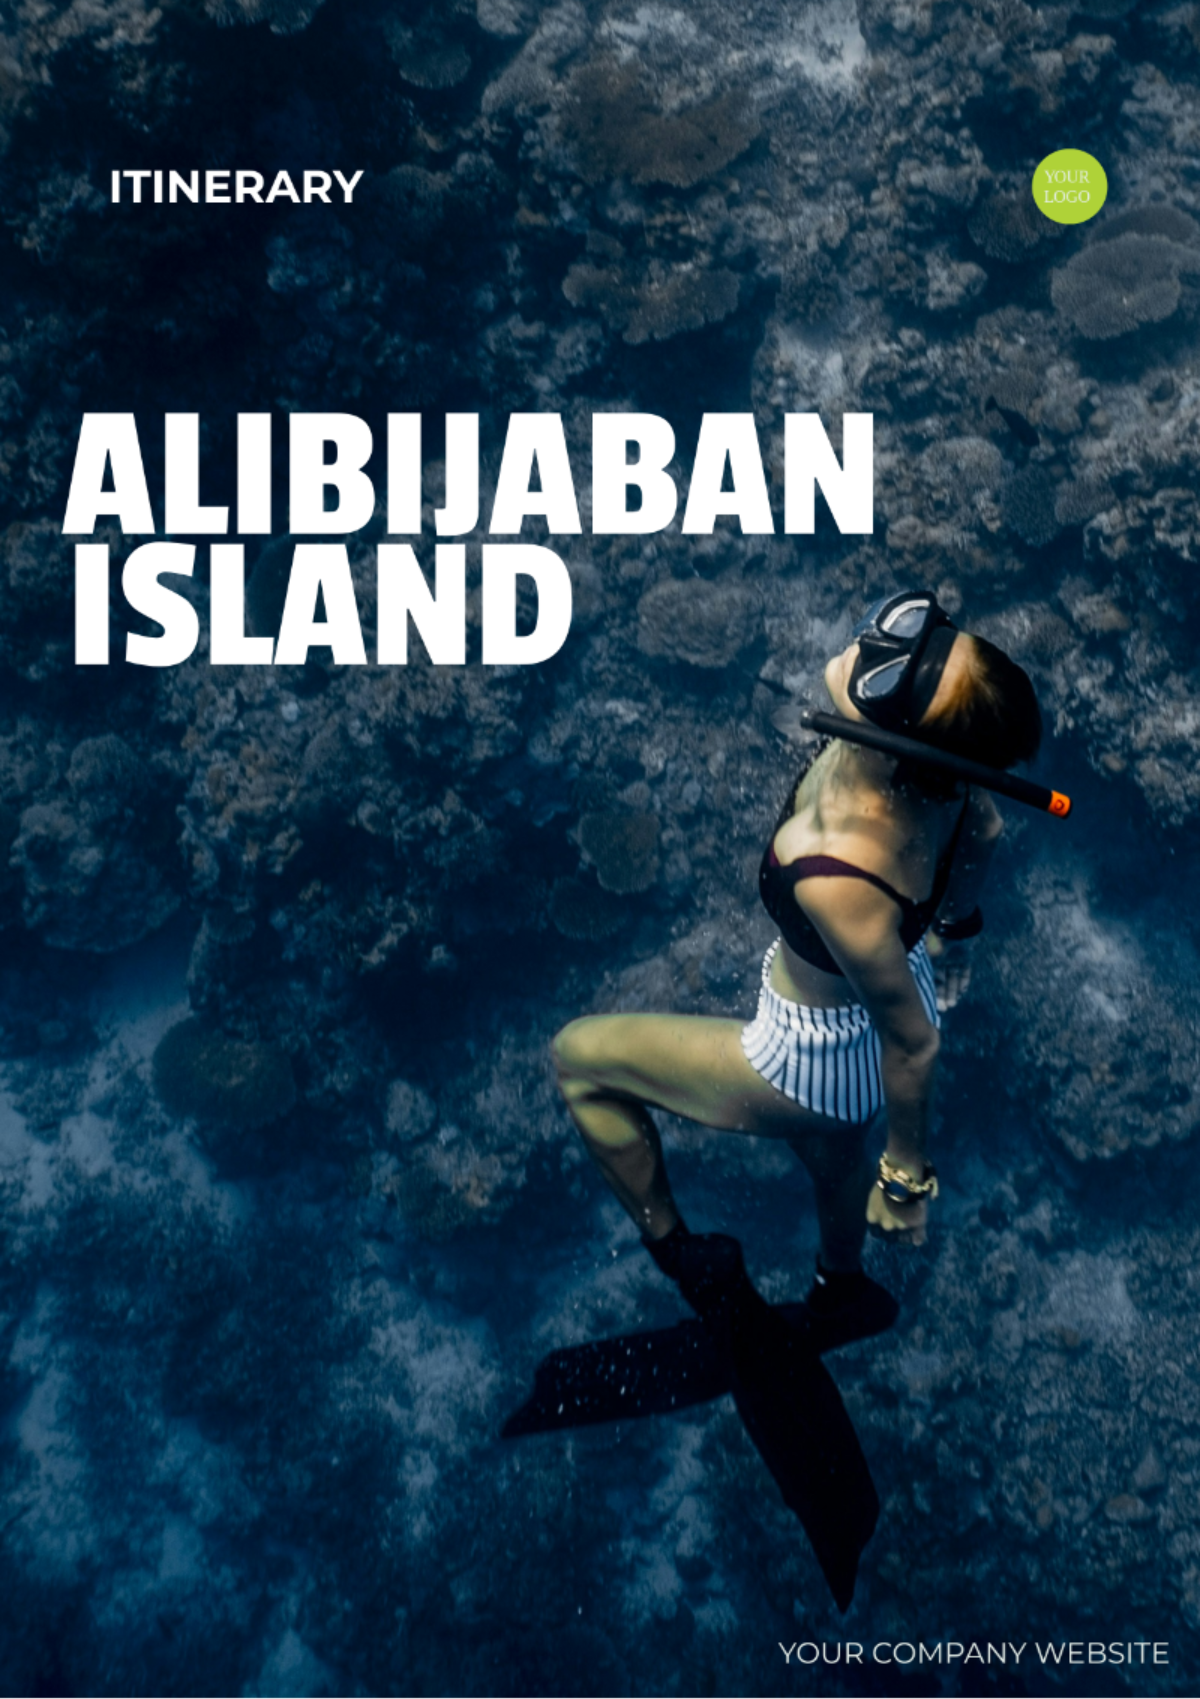 Alibijaban Island Itinerary Template